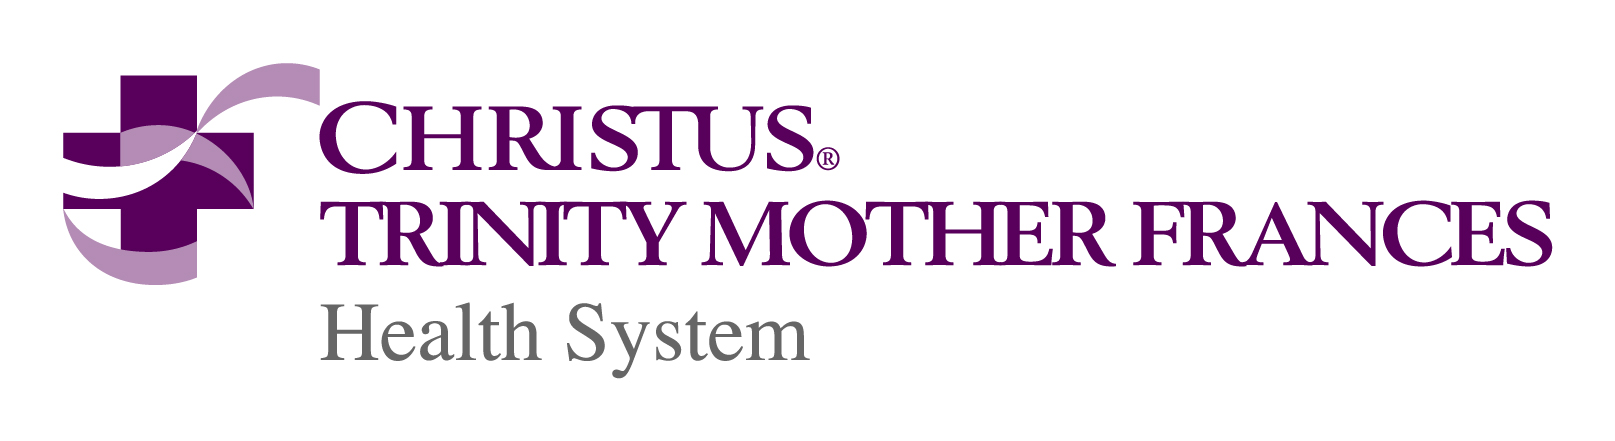 christus-trinity-mother-frances-logo